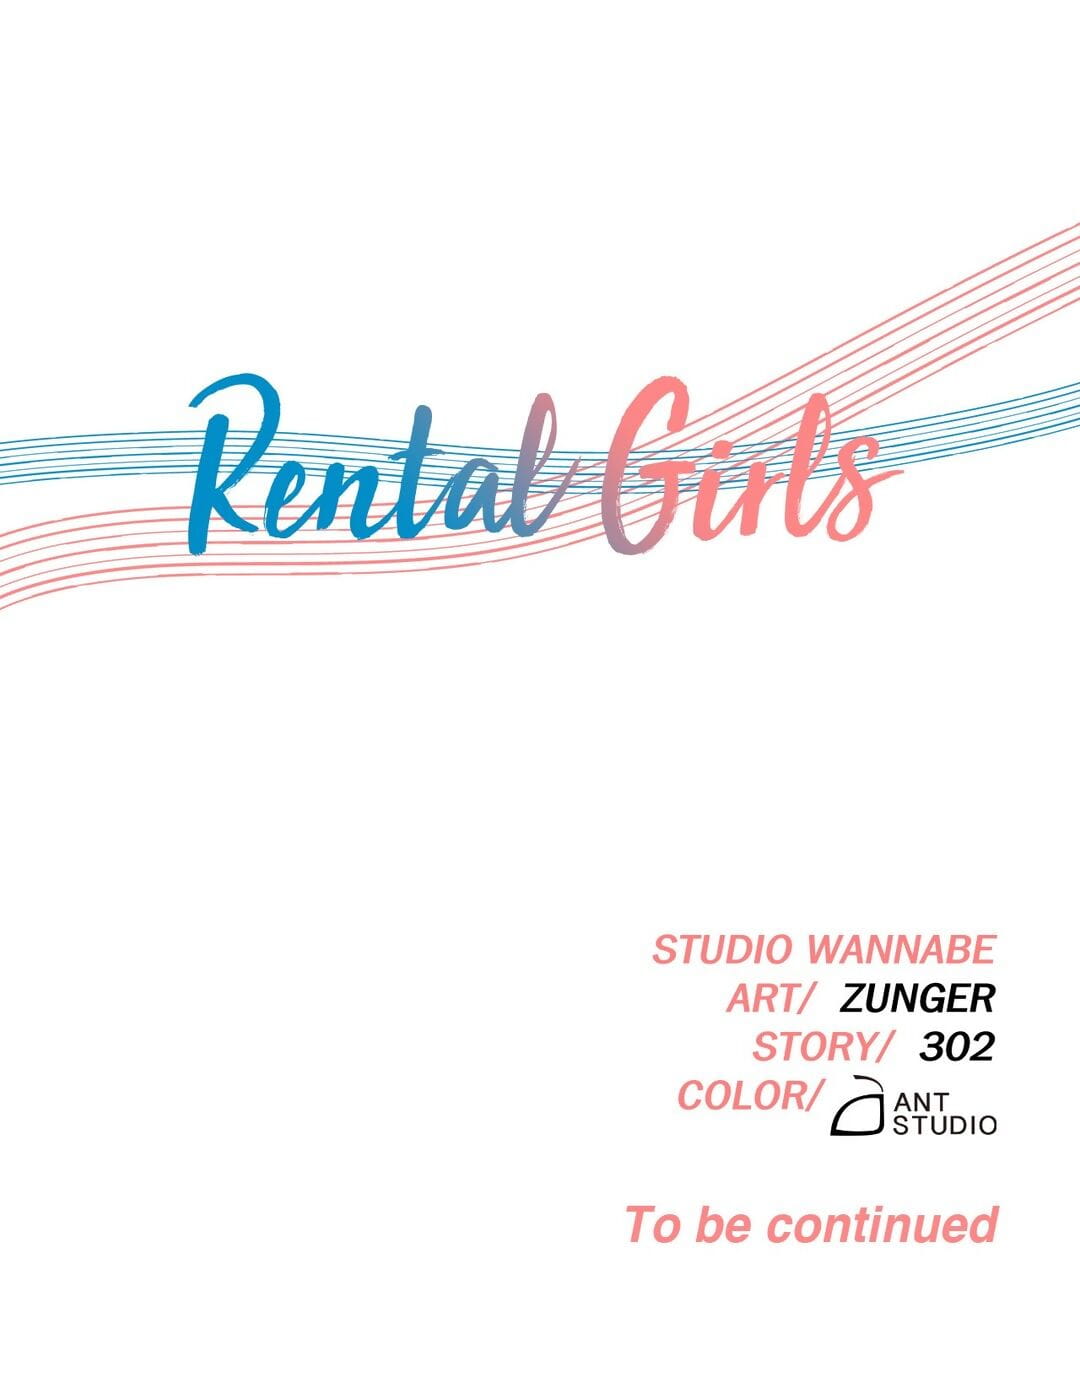 Rental Girls Ch 20 - 24 - part 3